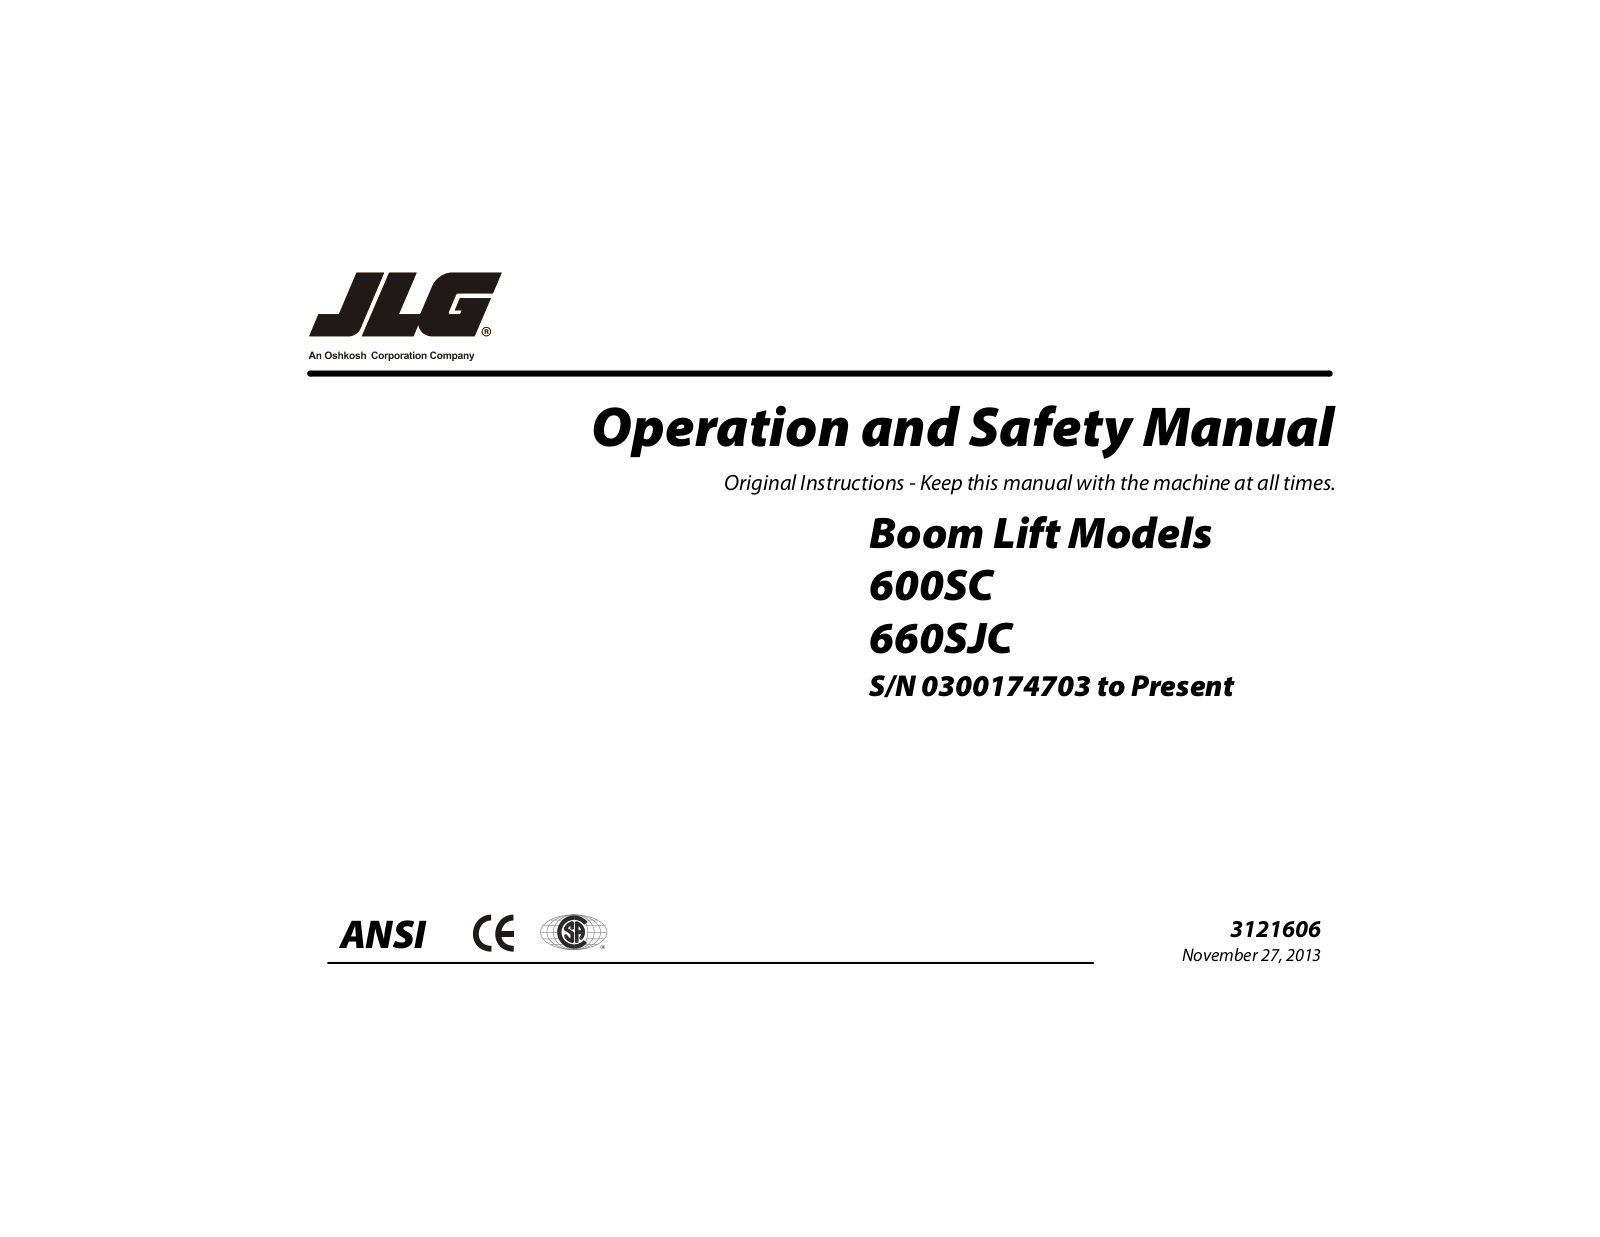 JLG 600SC-660SJC Operator Manual